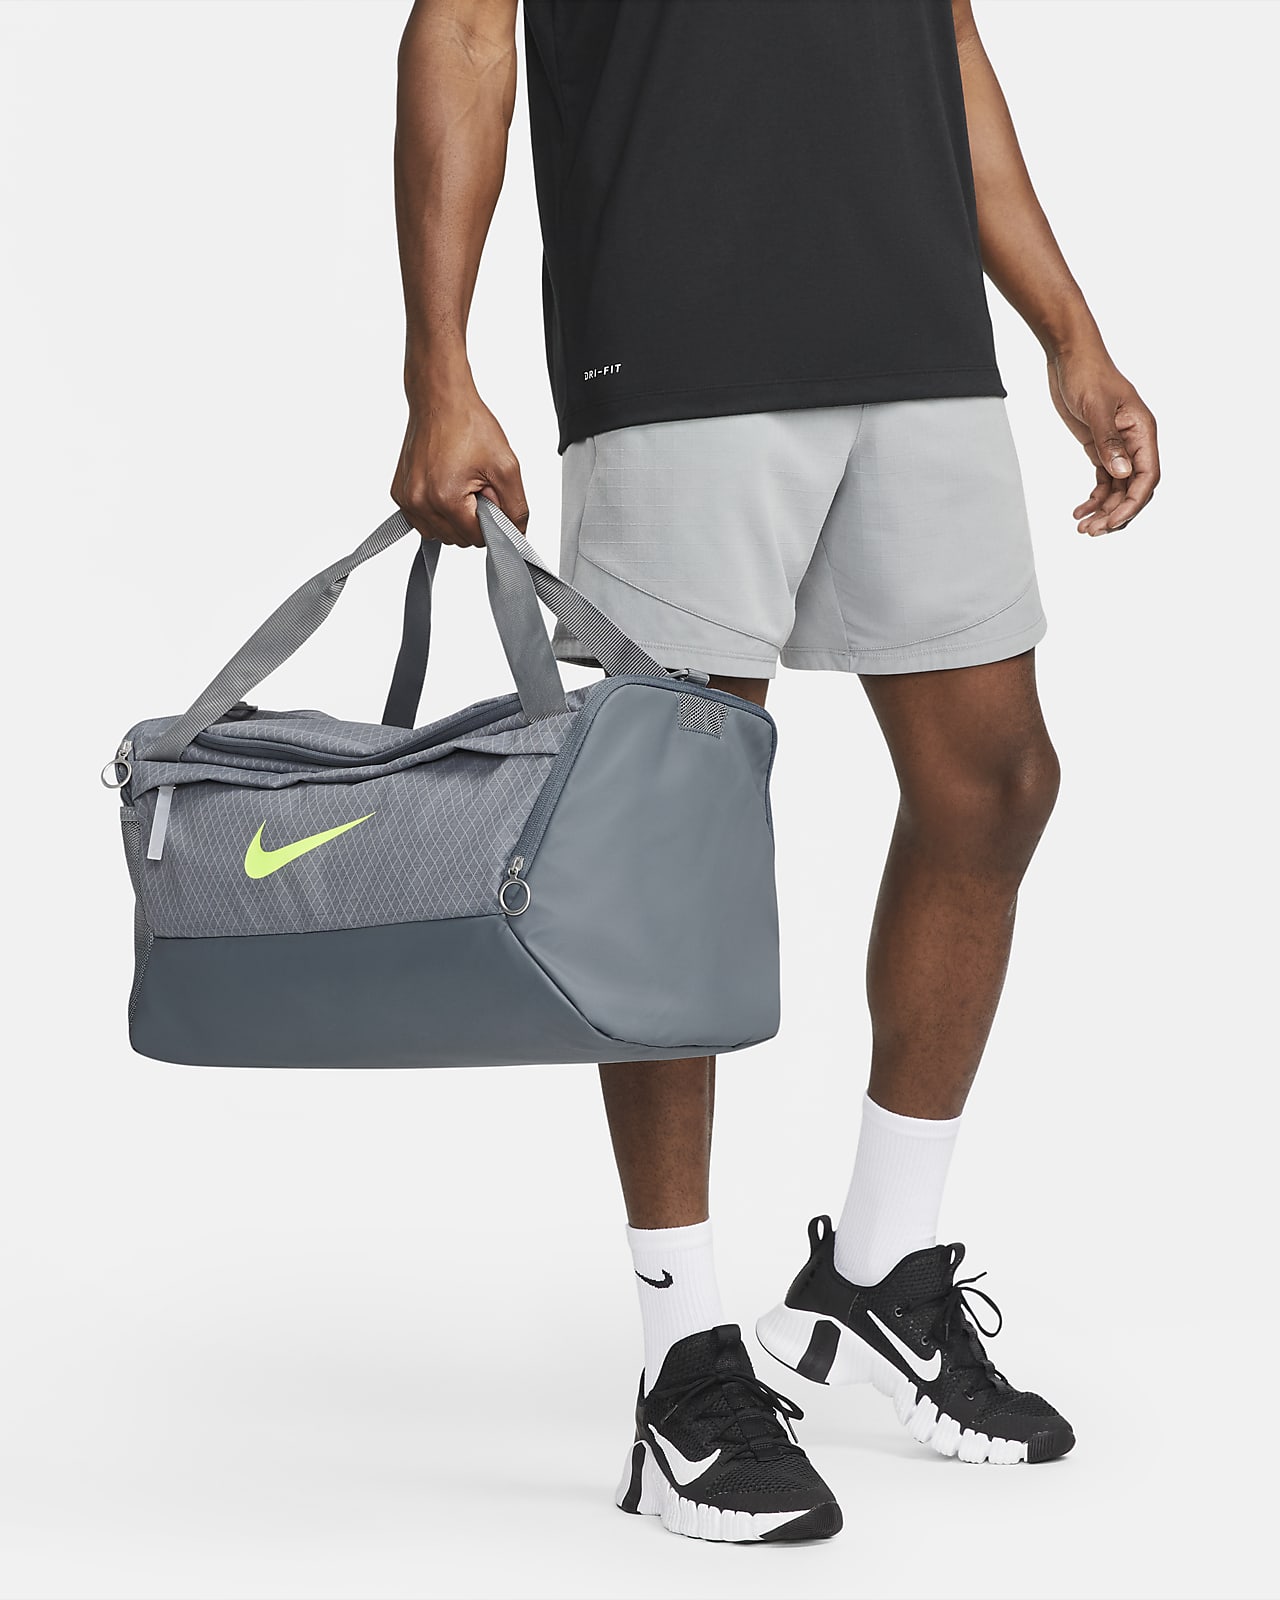 Nike Mens Brasilia Small 41 Litre Duffle Bag